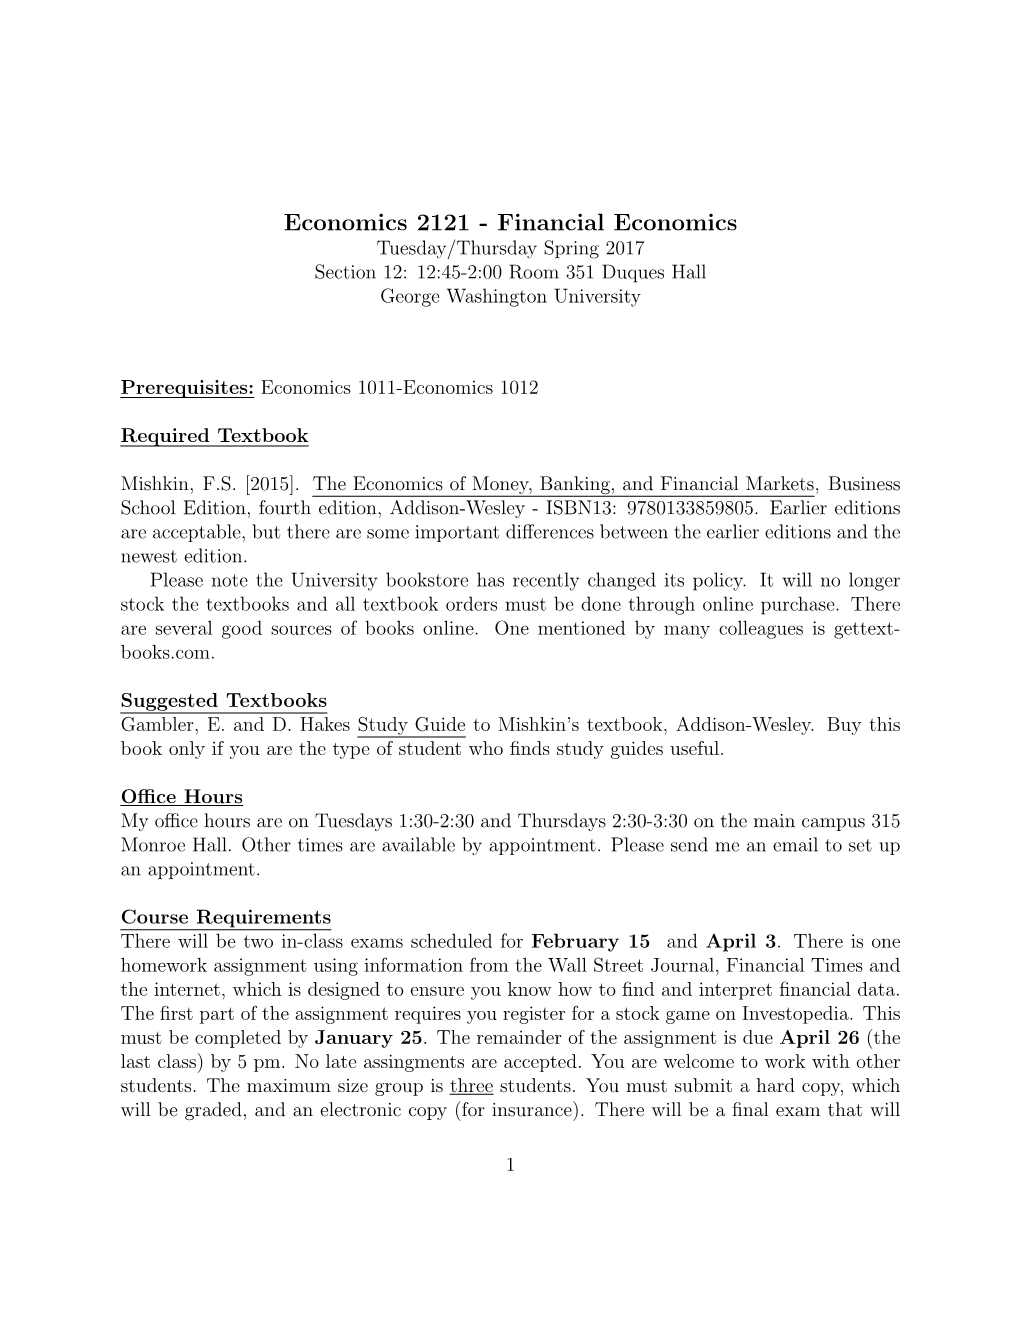 Economics 2121 - Financial Economics Tuesday/Thursday Spring 2017 Section 12: 12:45-2:00 Room 351 Duques Hall George Washington University